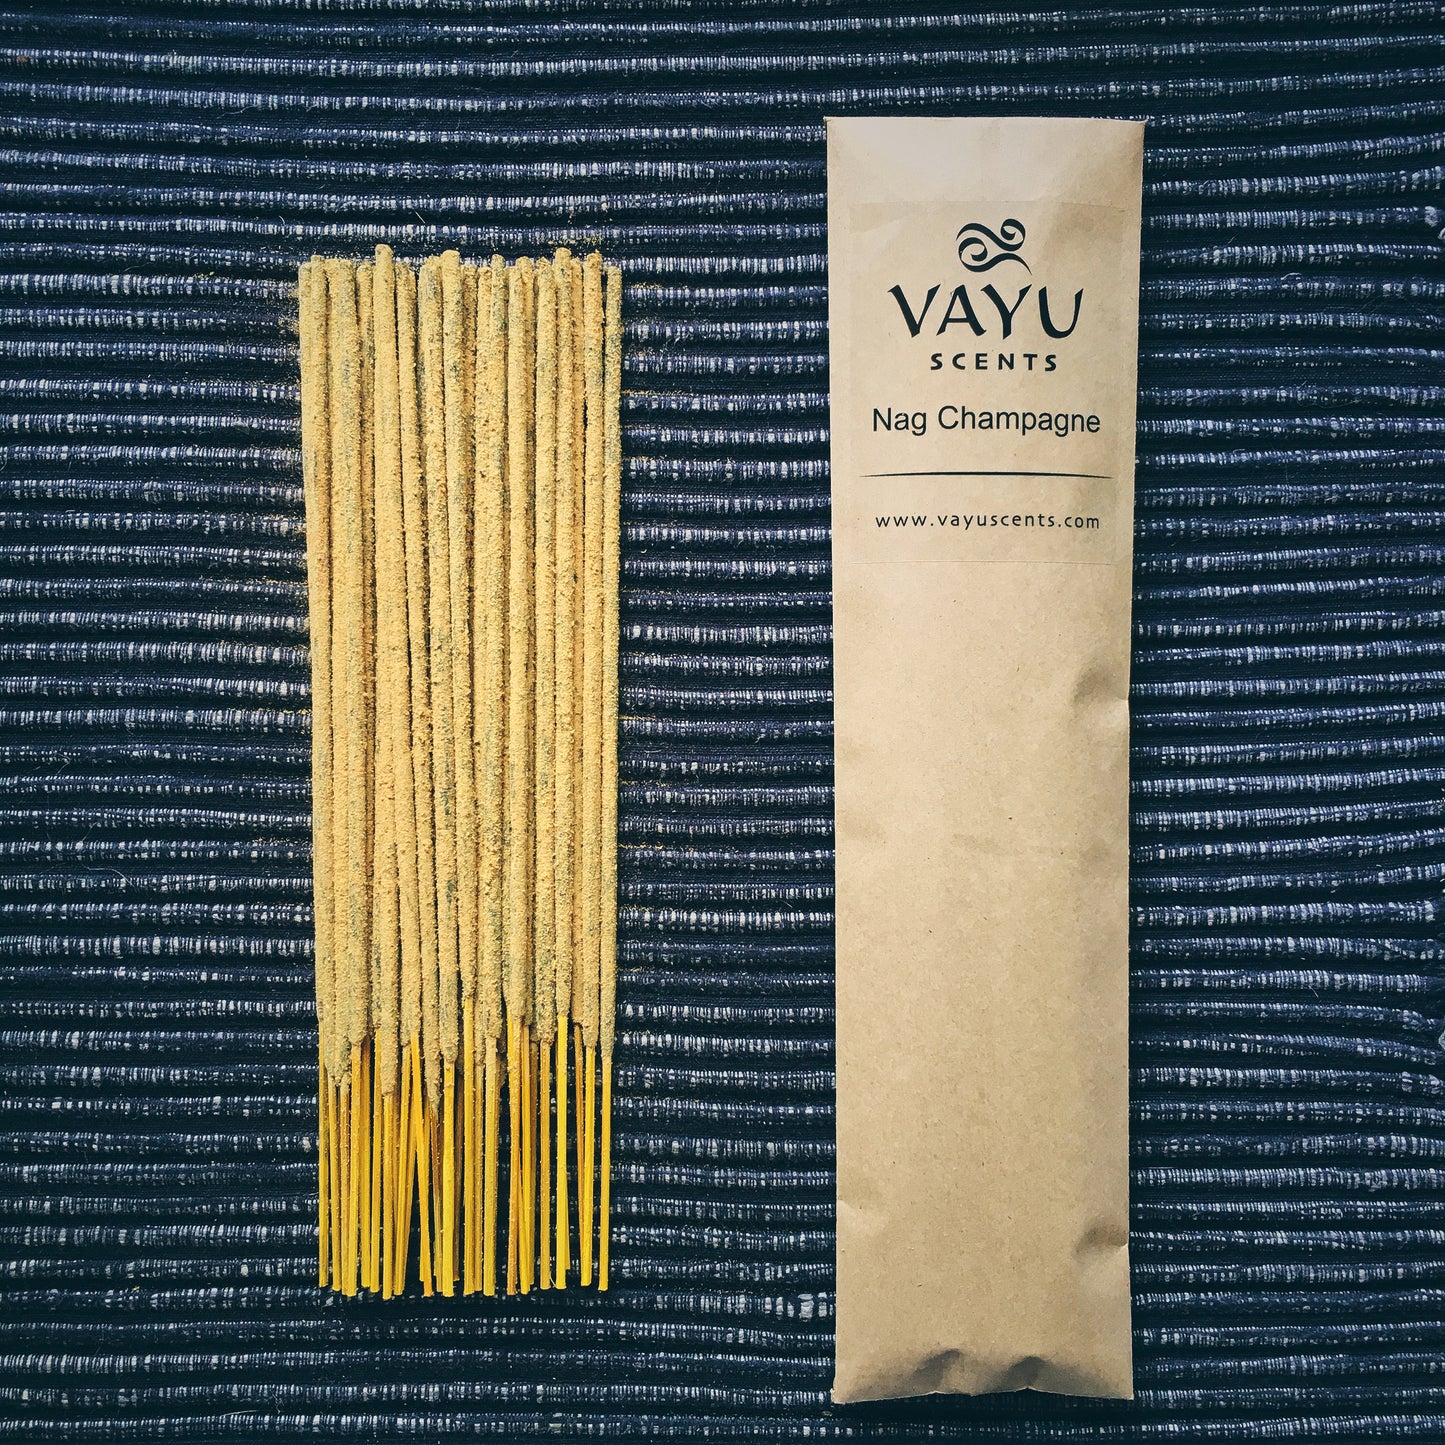 "Nag Champagne" — craft incense sticks